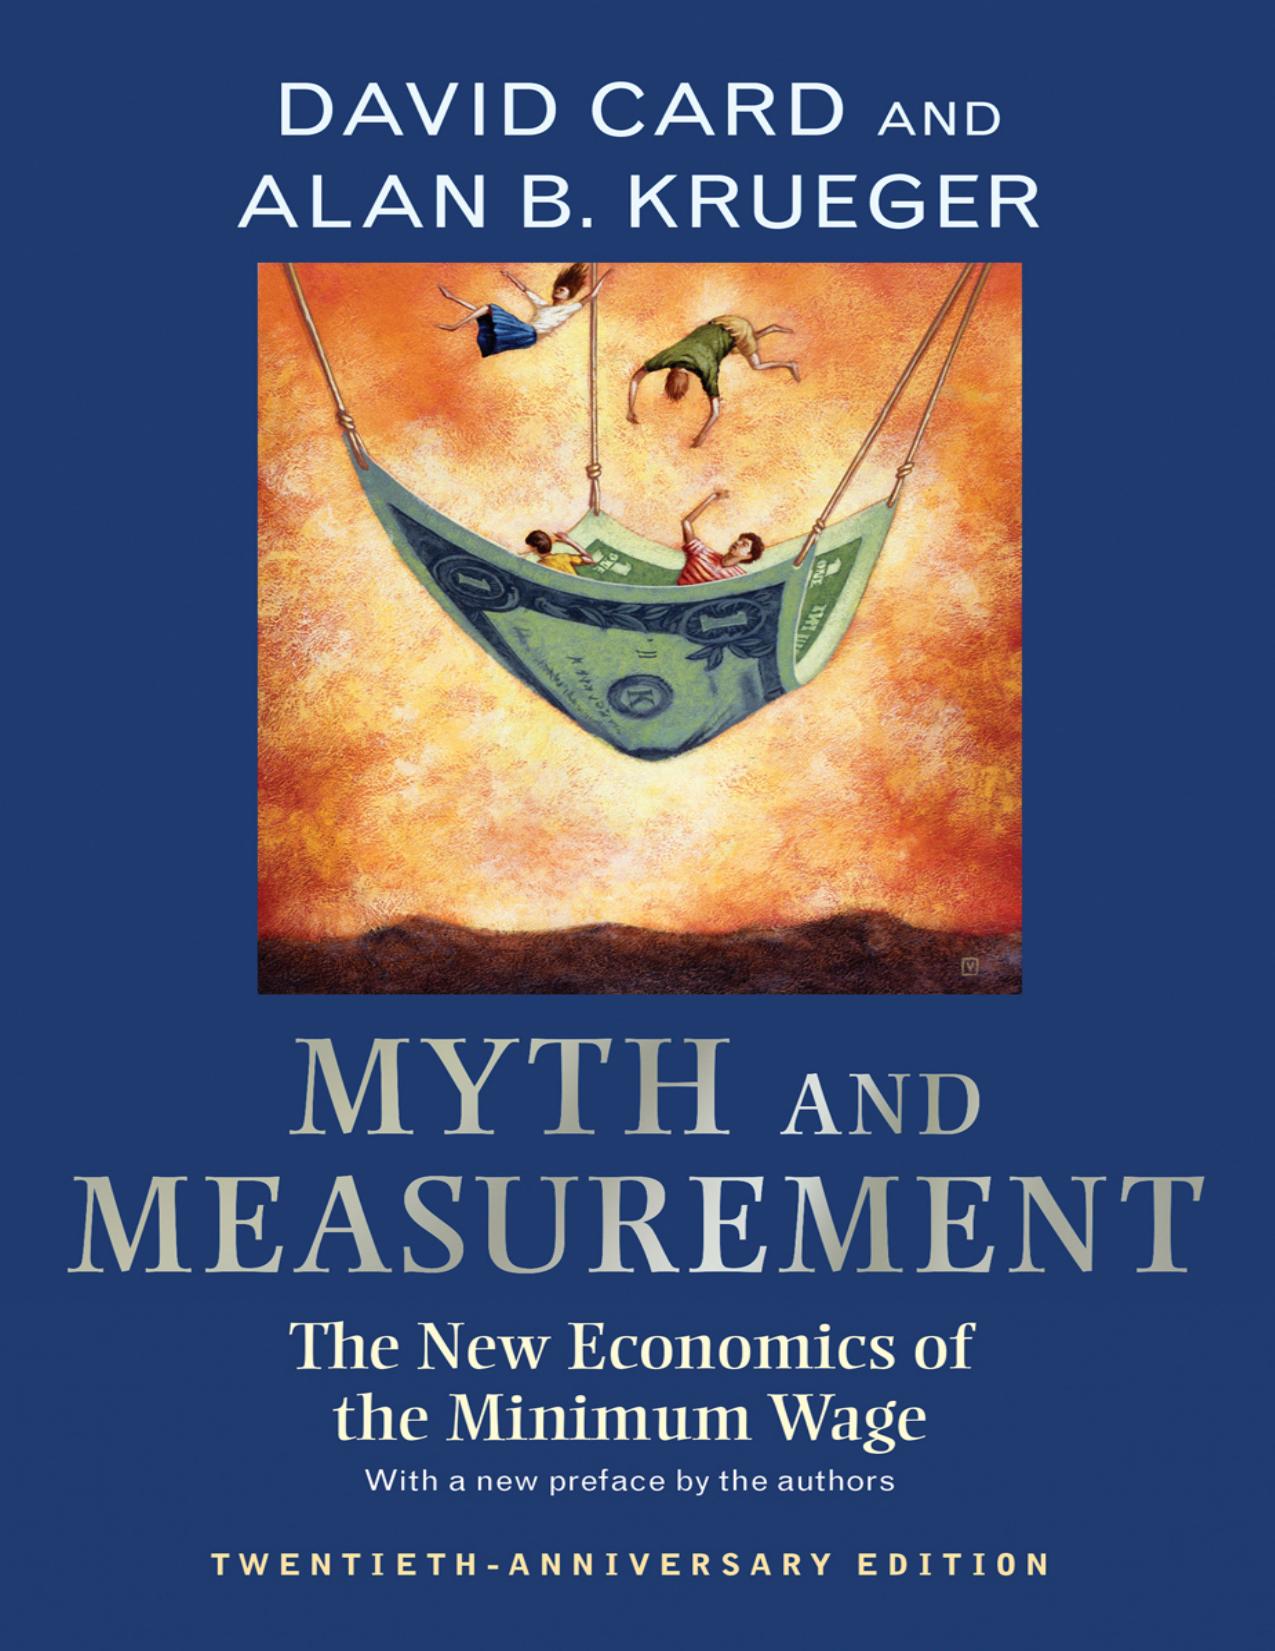 Myth and Measurement: The New Economics of the Minimum Wage  by Card, David, Krueger, Alan B.,, Card, David